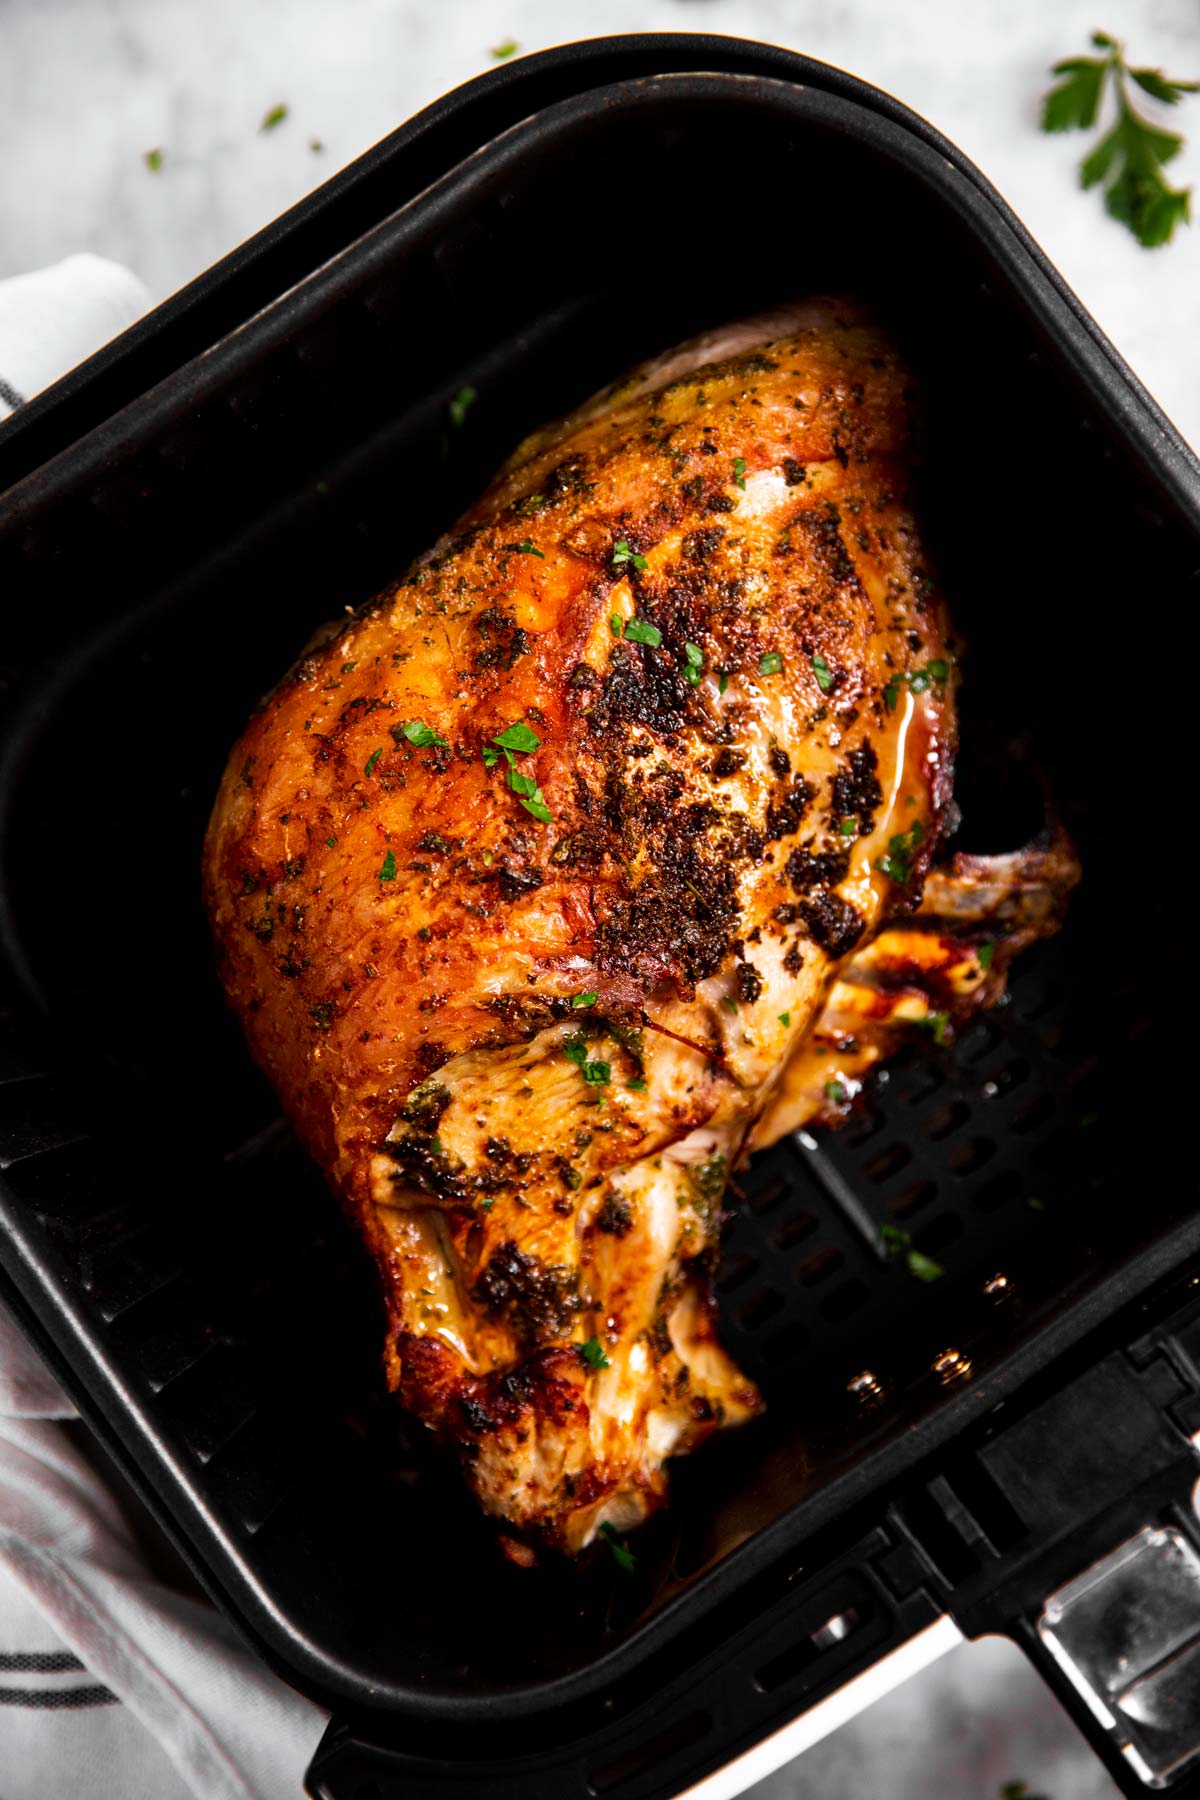 https://www.savorynothings.com/wp-content/uploads/2021/11/air-fryer-turkey-breast-recipe-image-step-4.jpg